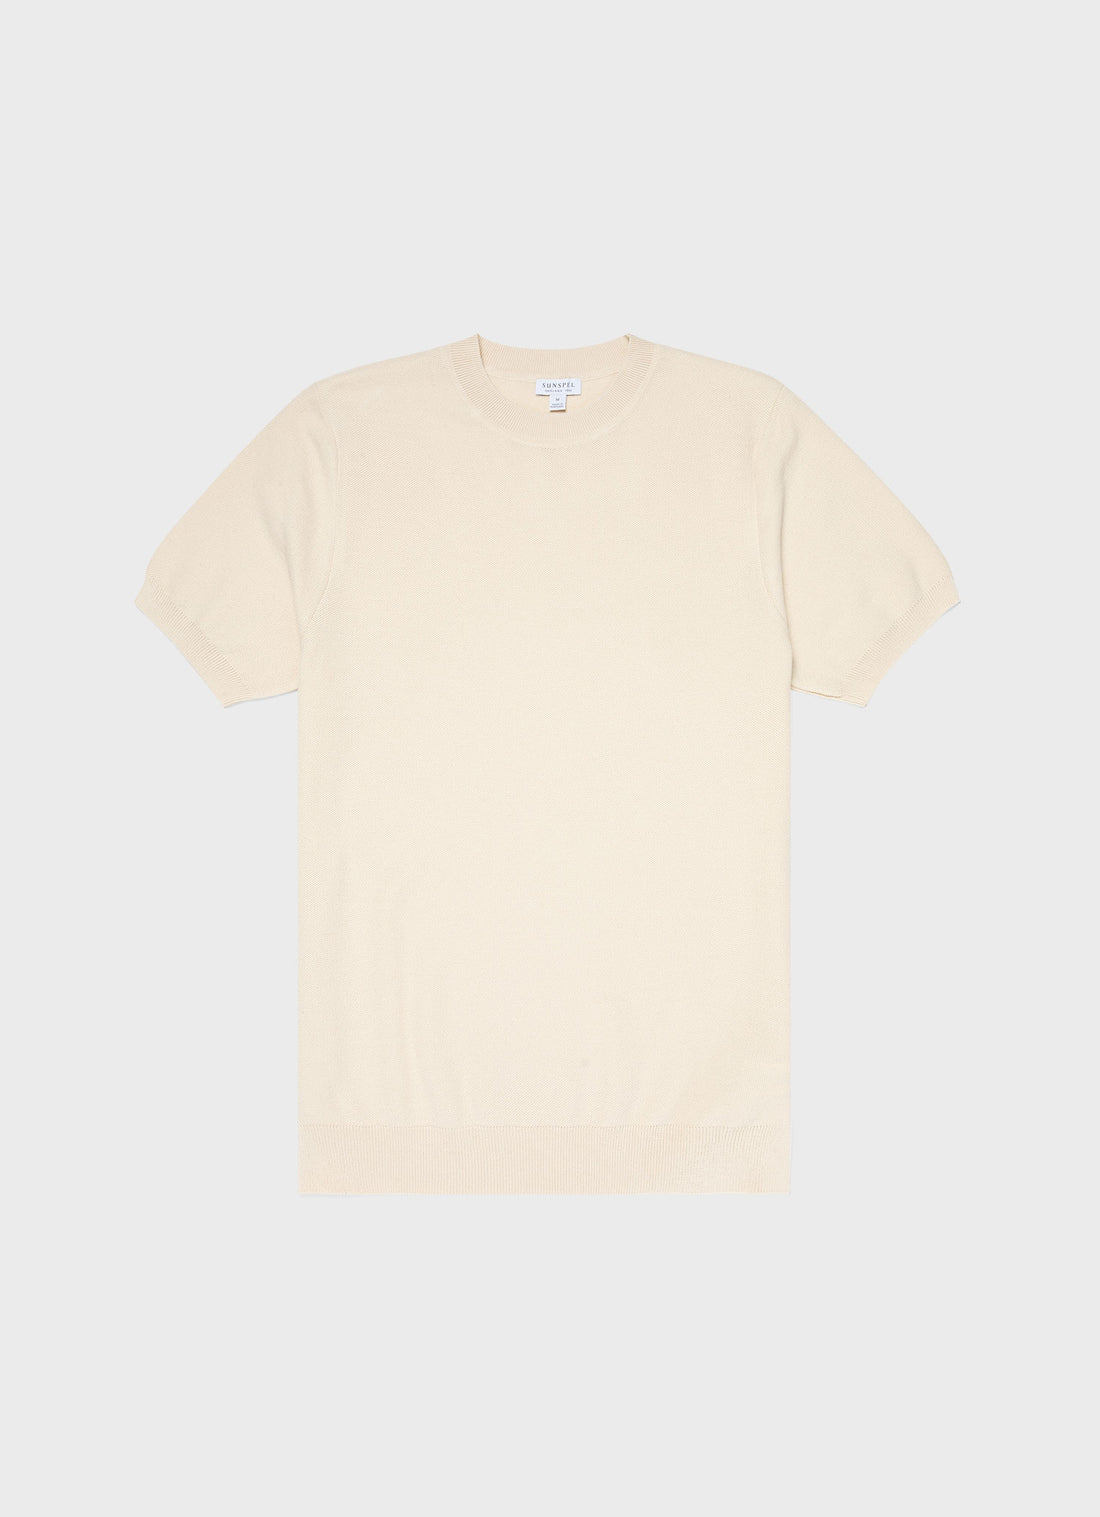 Men's Honeycomb Knitted T-shirt in Ecru